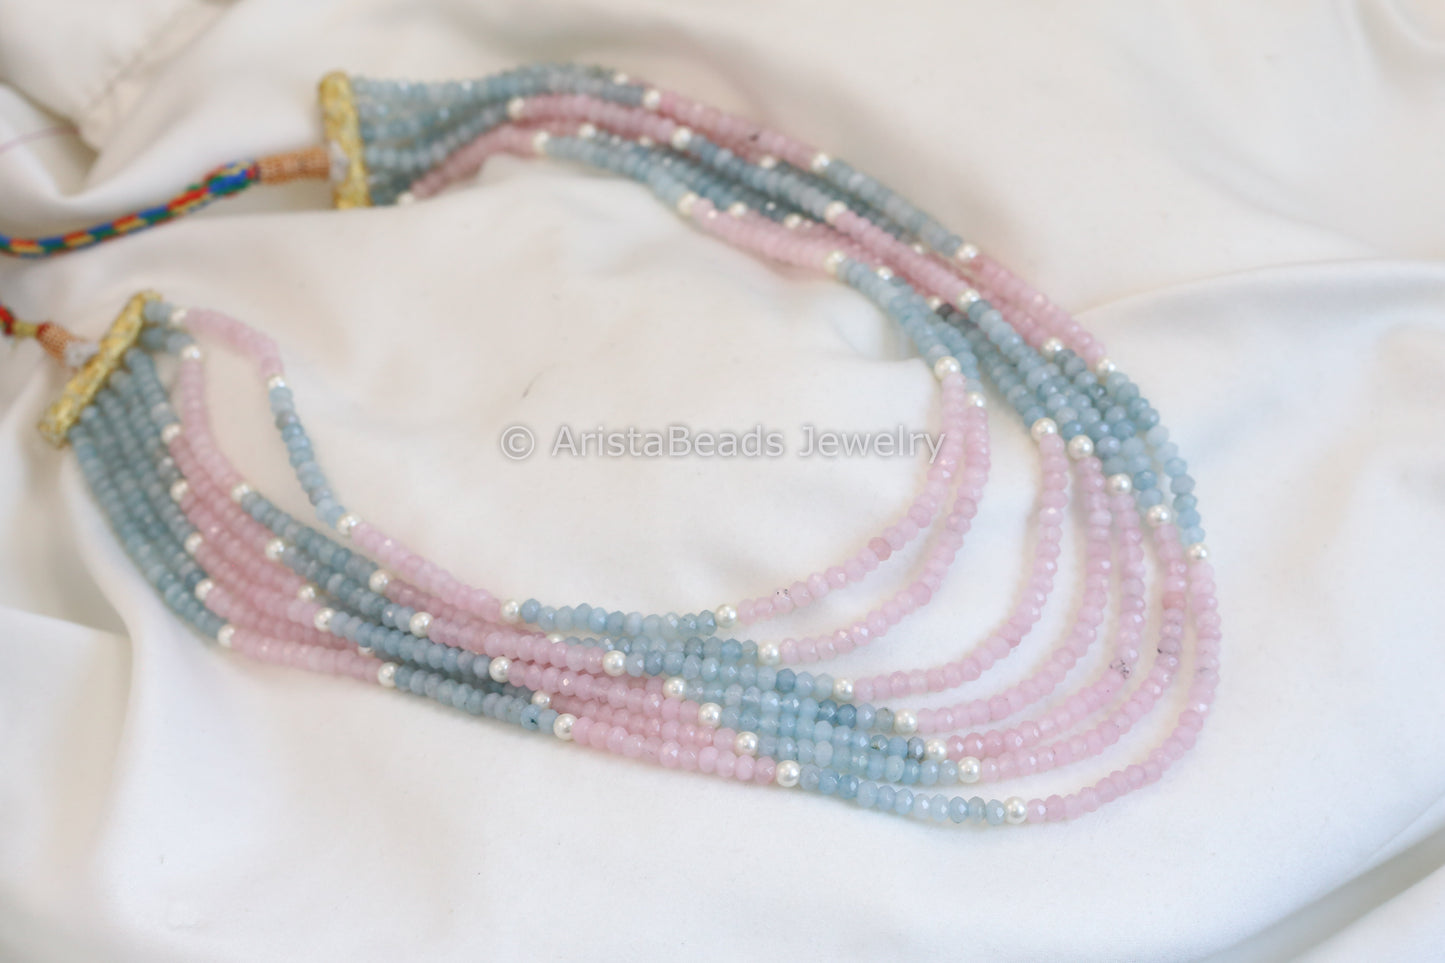 7 Strand Semiprecious Beads Necklace - Style 4